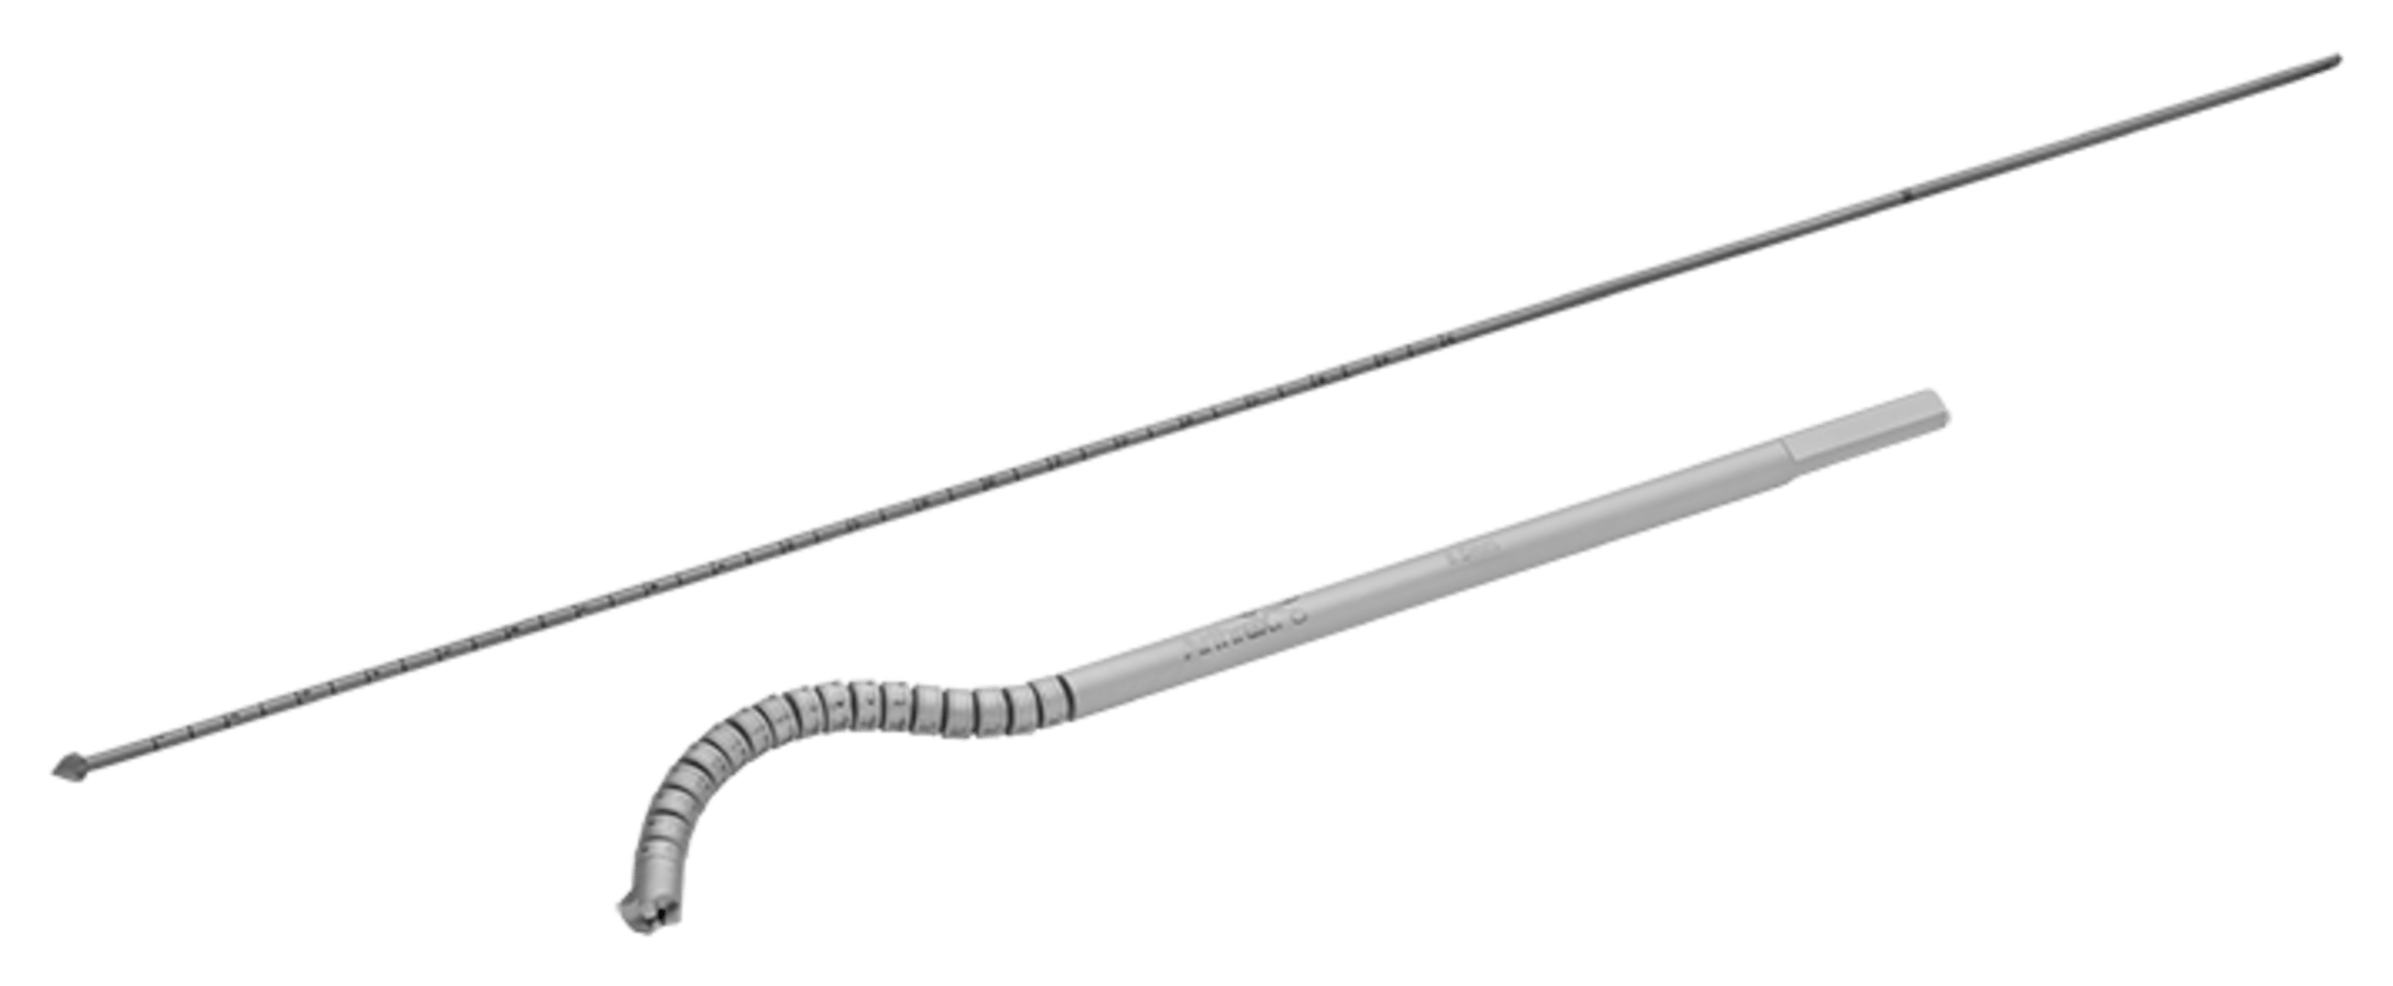 Arthrex Flexible Reamer with Flexible TightRope Drill Pin, 8.5 mm